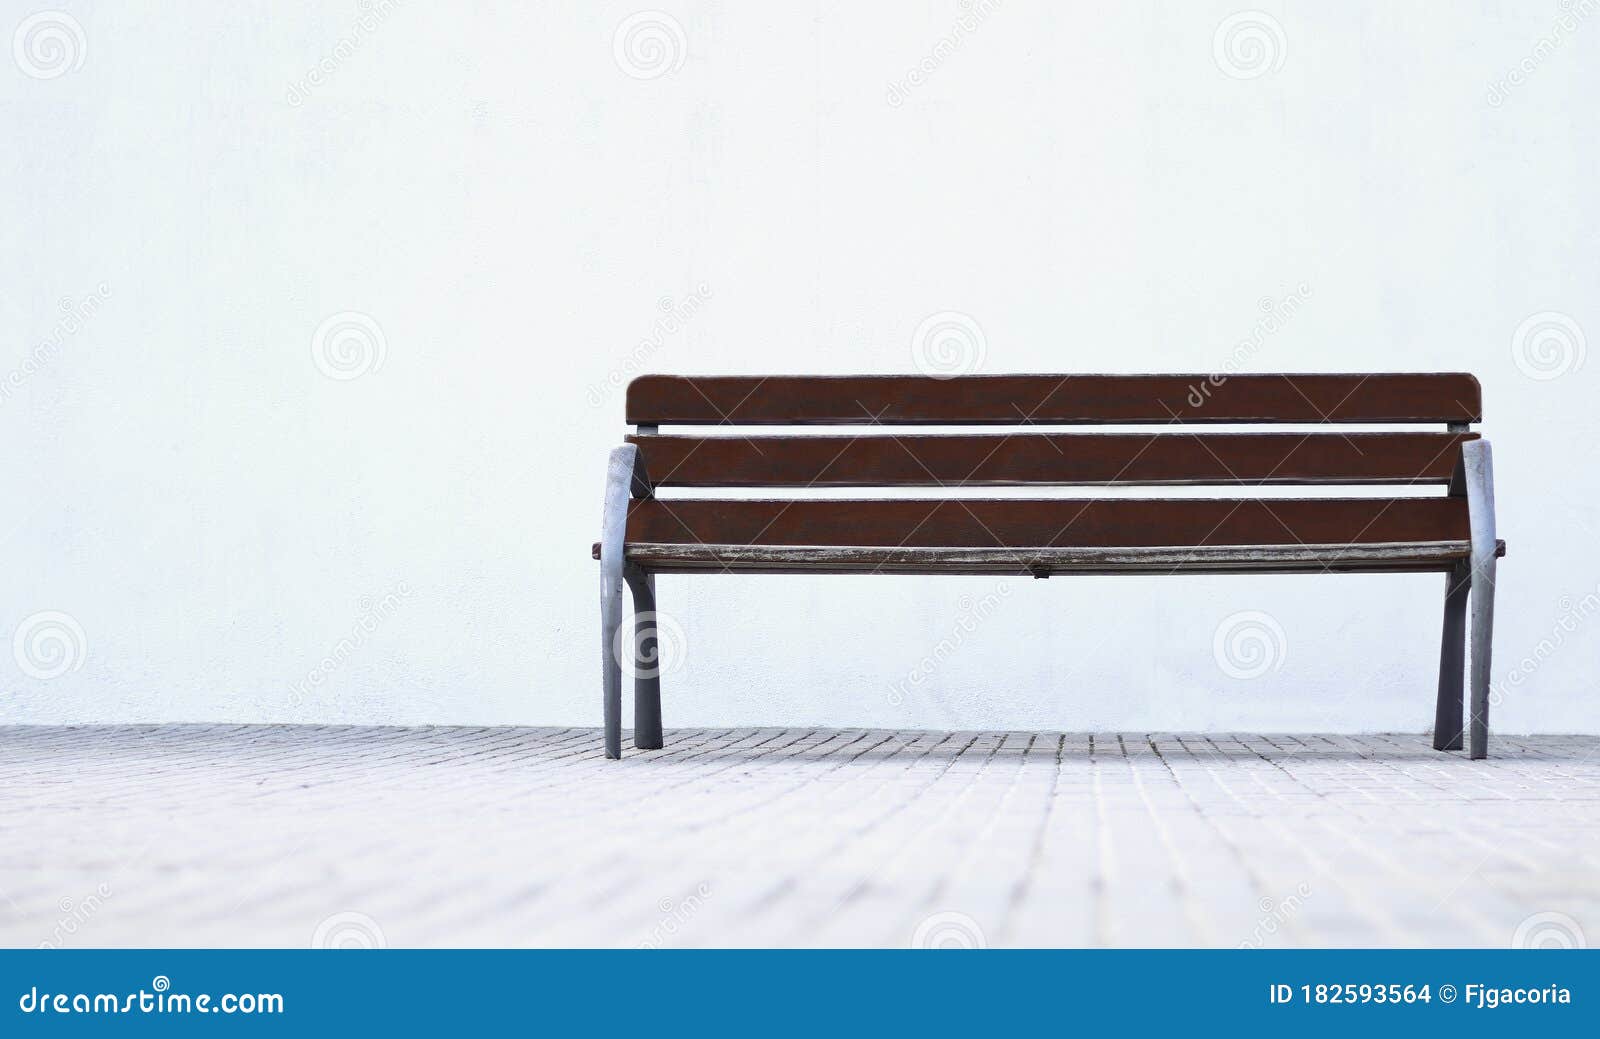 minimalist park bench with white background